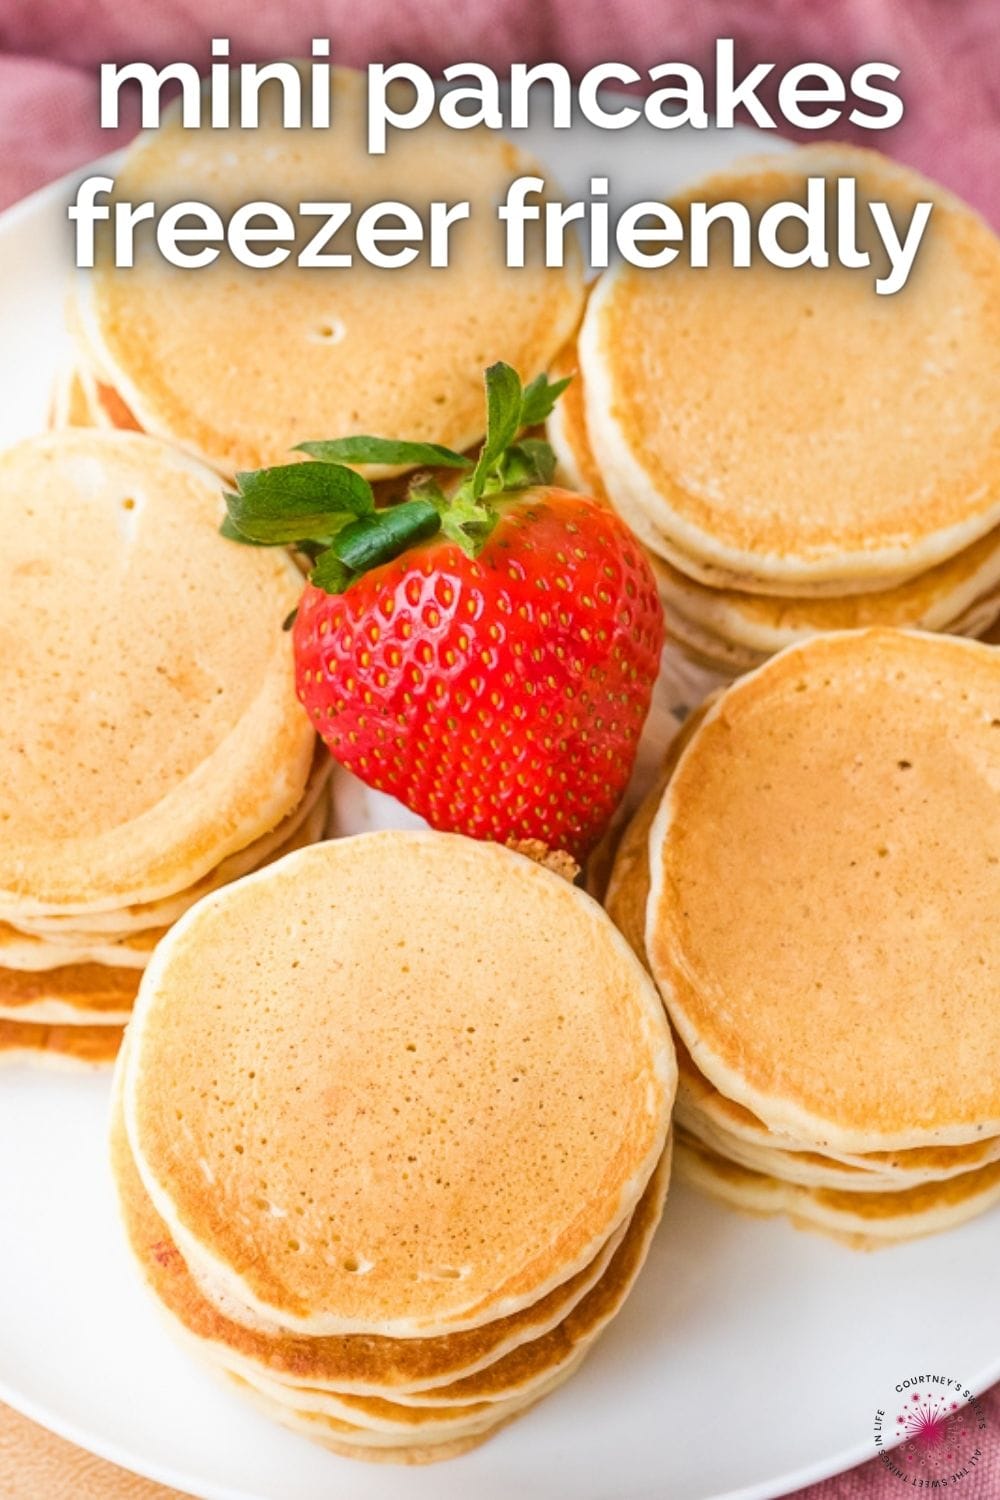 stacked mini pancakes with text on image saying mini pancakes.